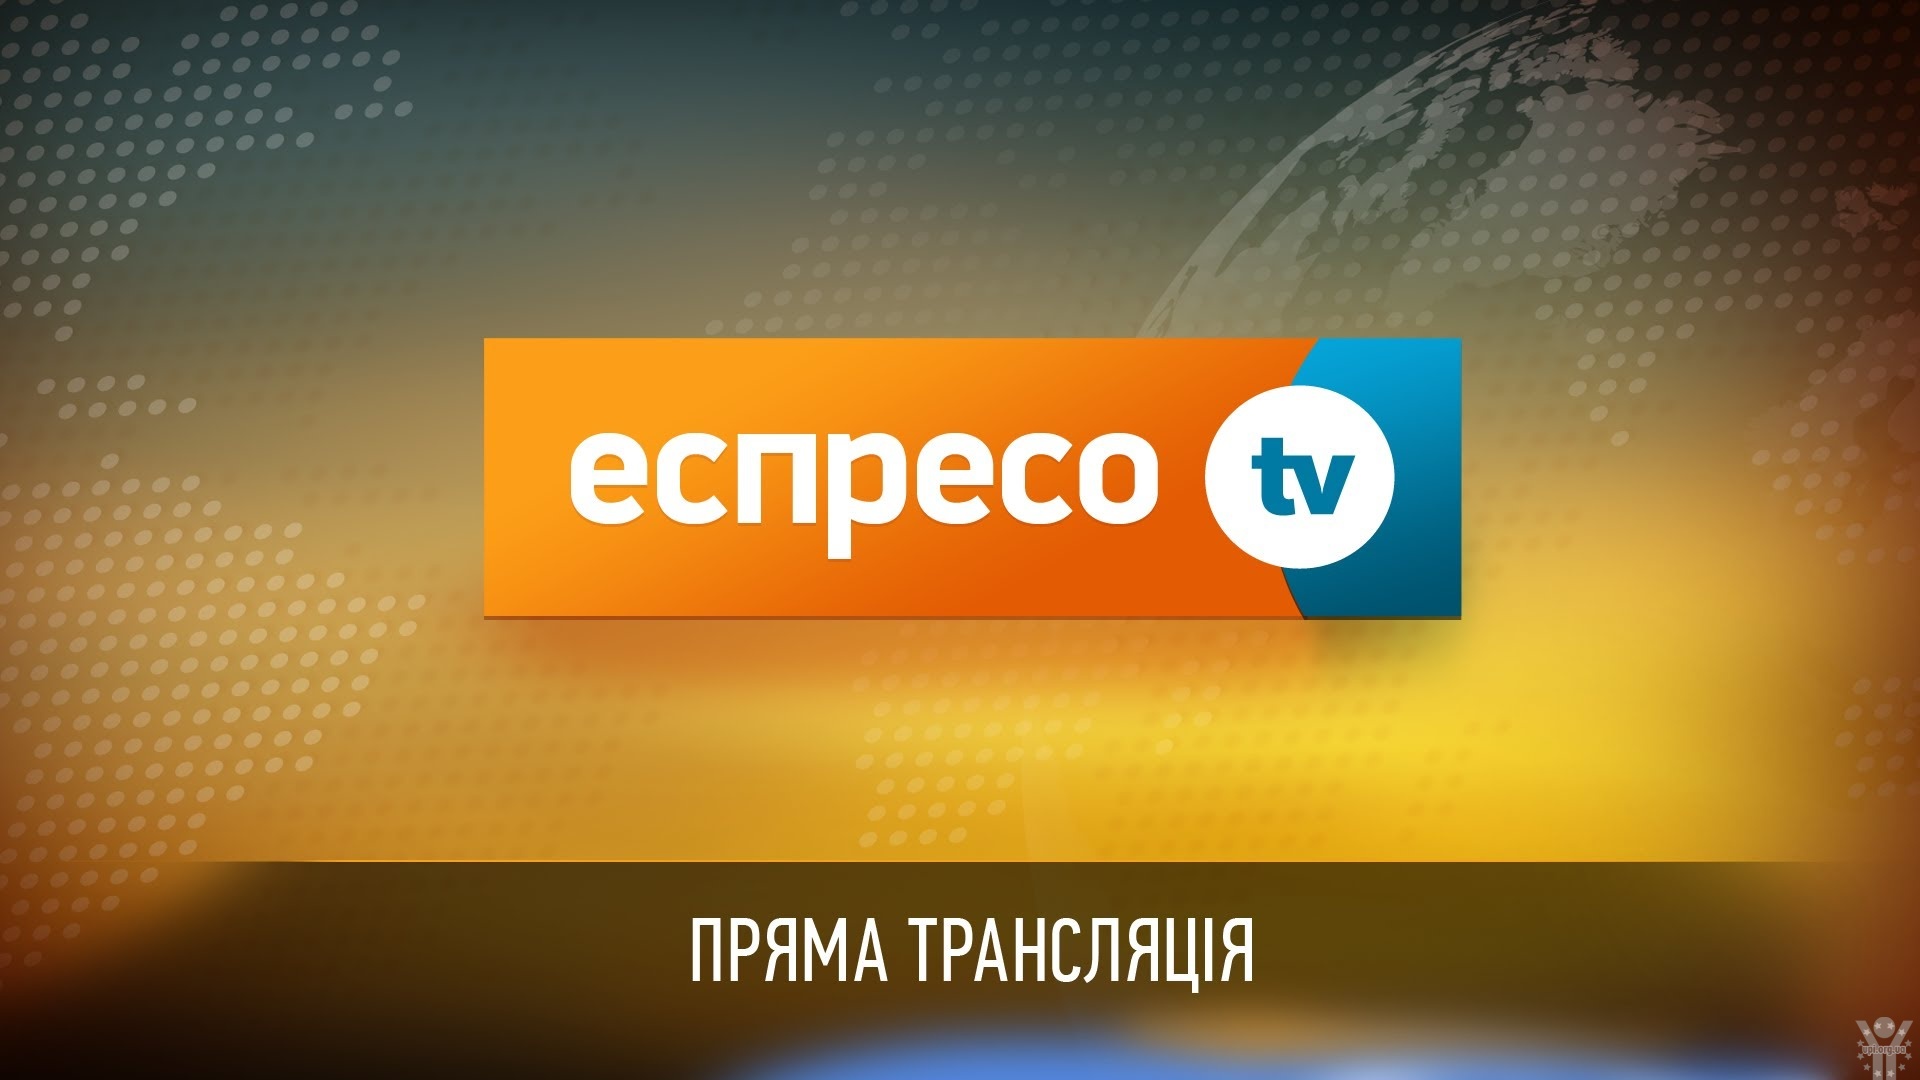 Національна рада попередила телеканал “Еспресо TV” за пряму трансляцію виступу Путіна